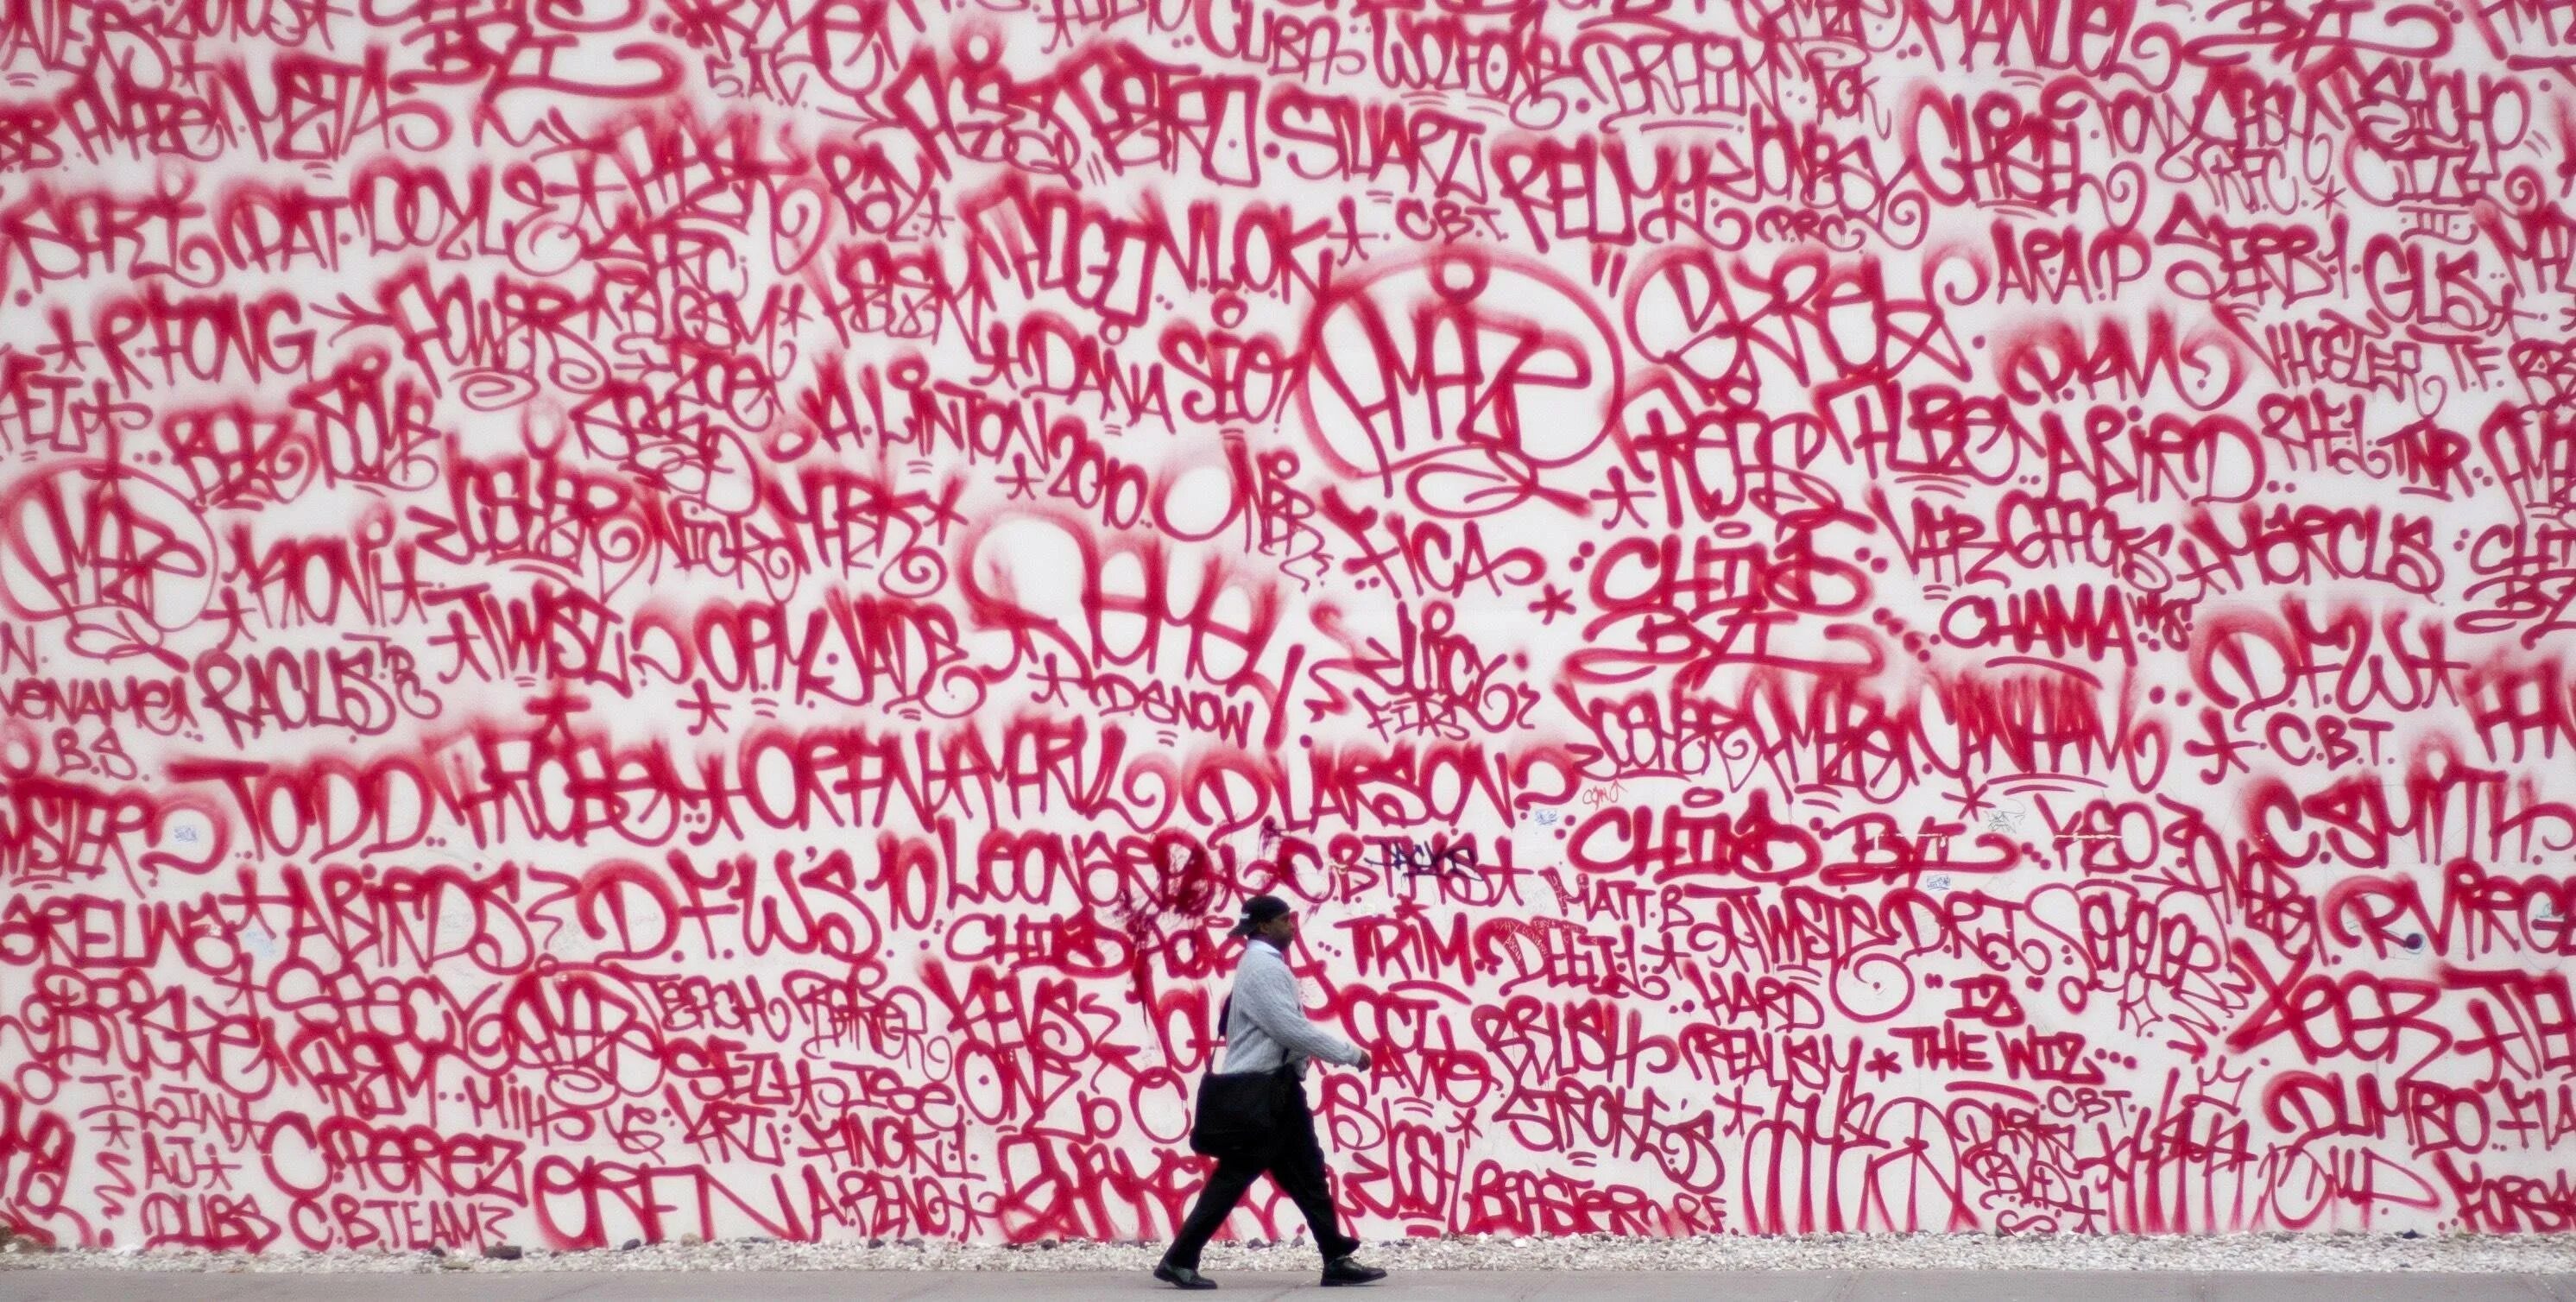 Современный тег. Теги граффити. Теги на стенах. Теги граффити на стенах. Самые популярные граффити.